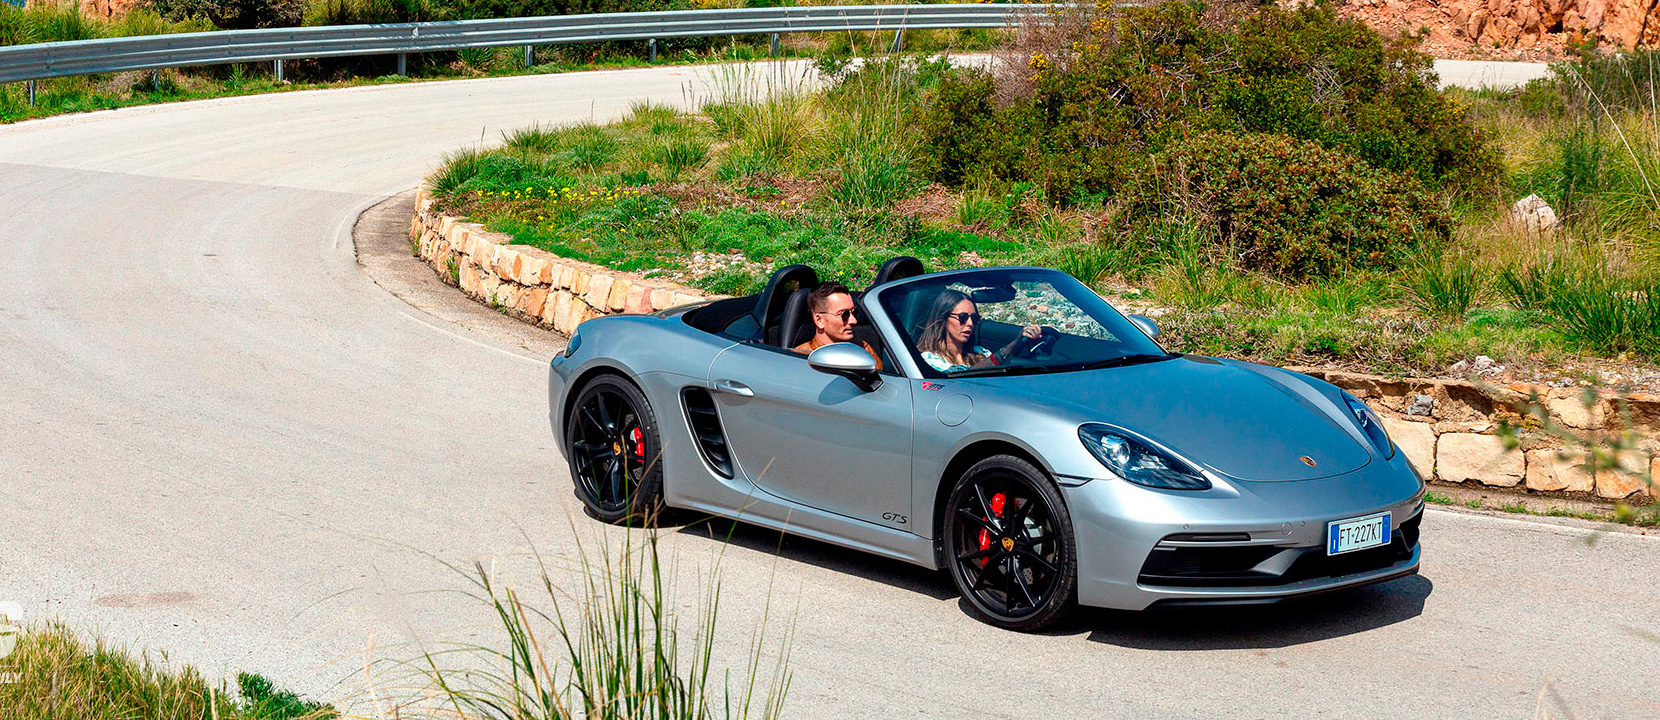 3 Day Self drive Porsche Ragusa Tour, Sicily / Italy - June, July, Sept